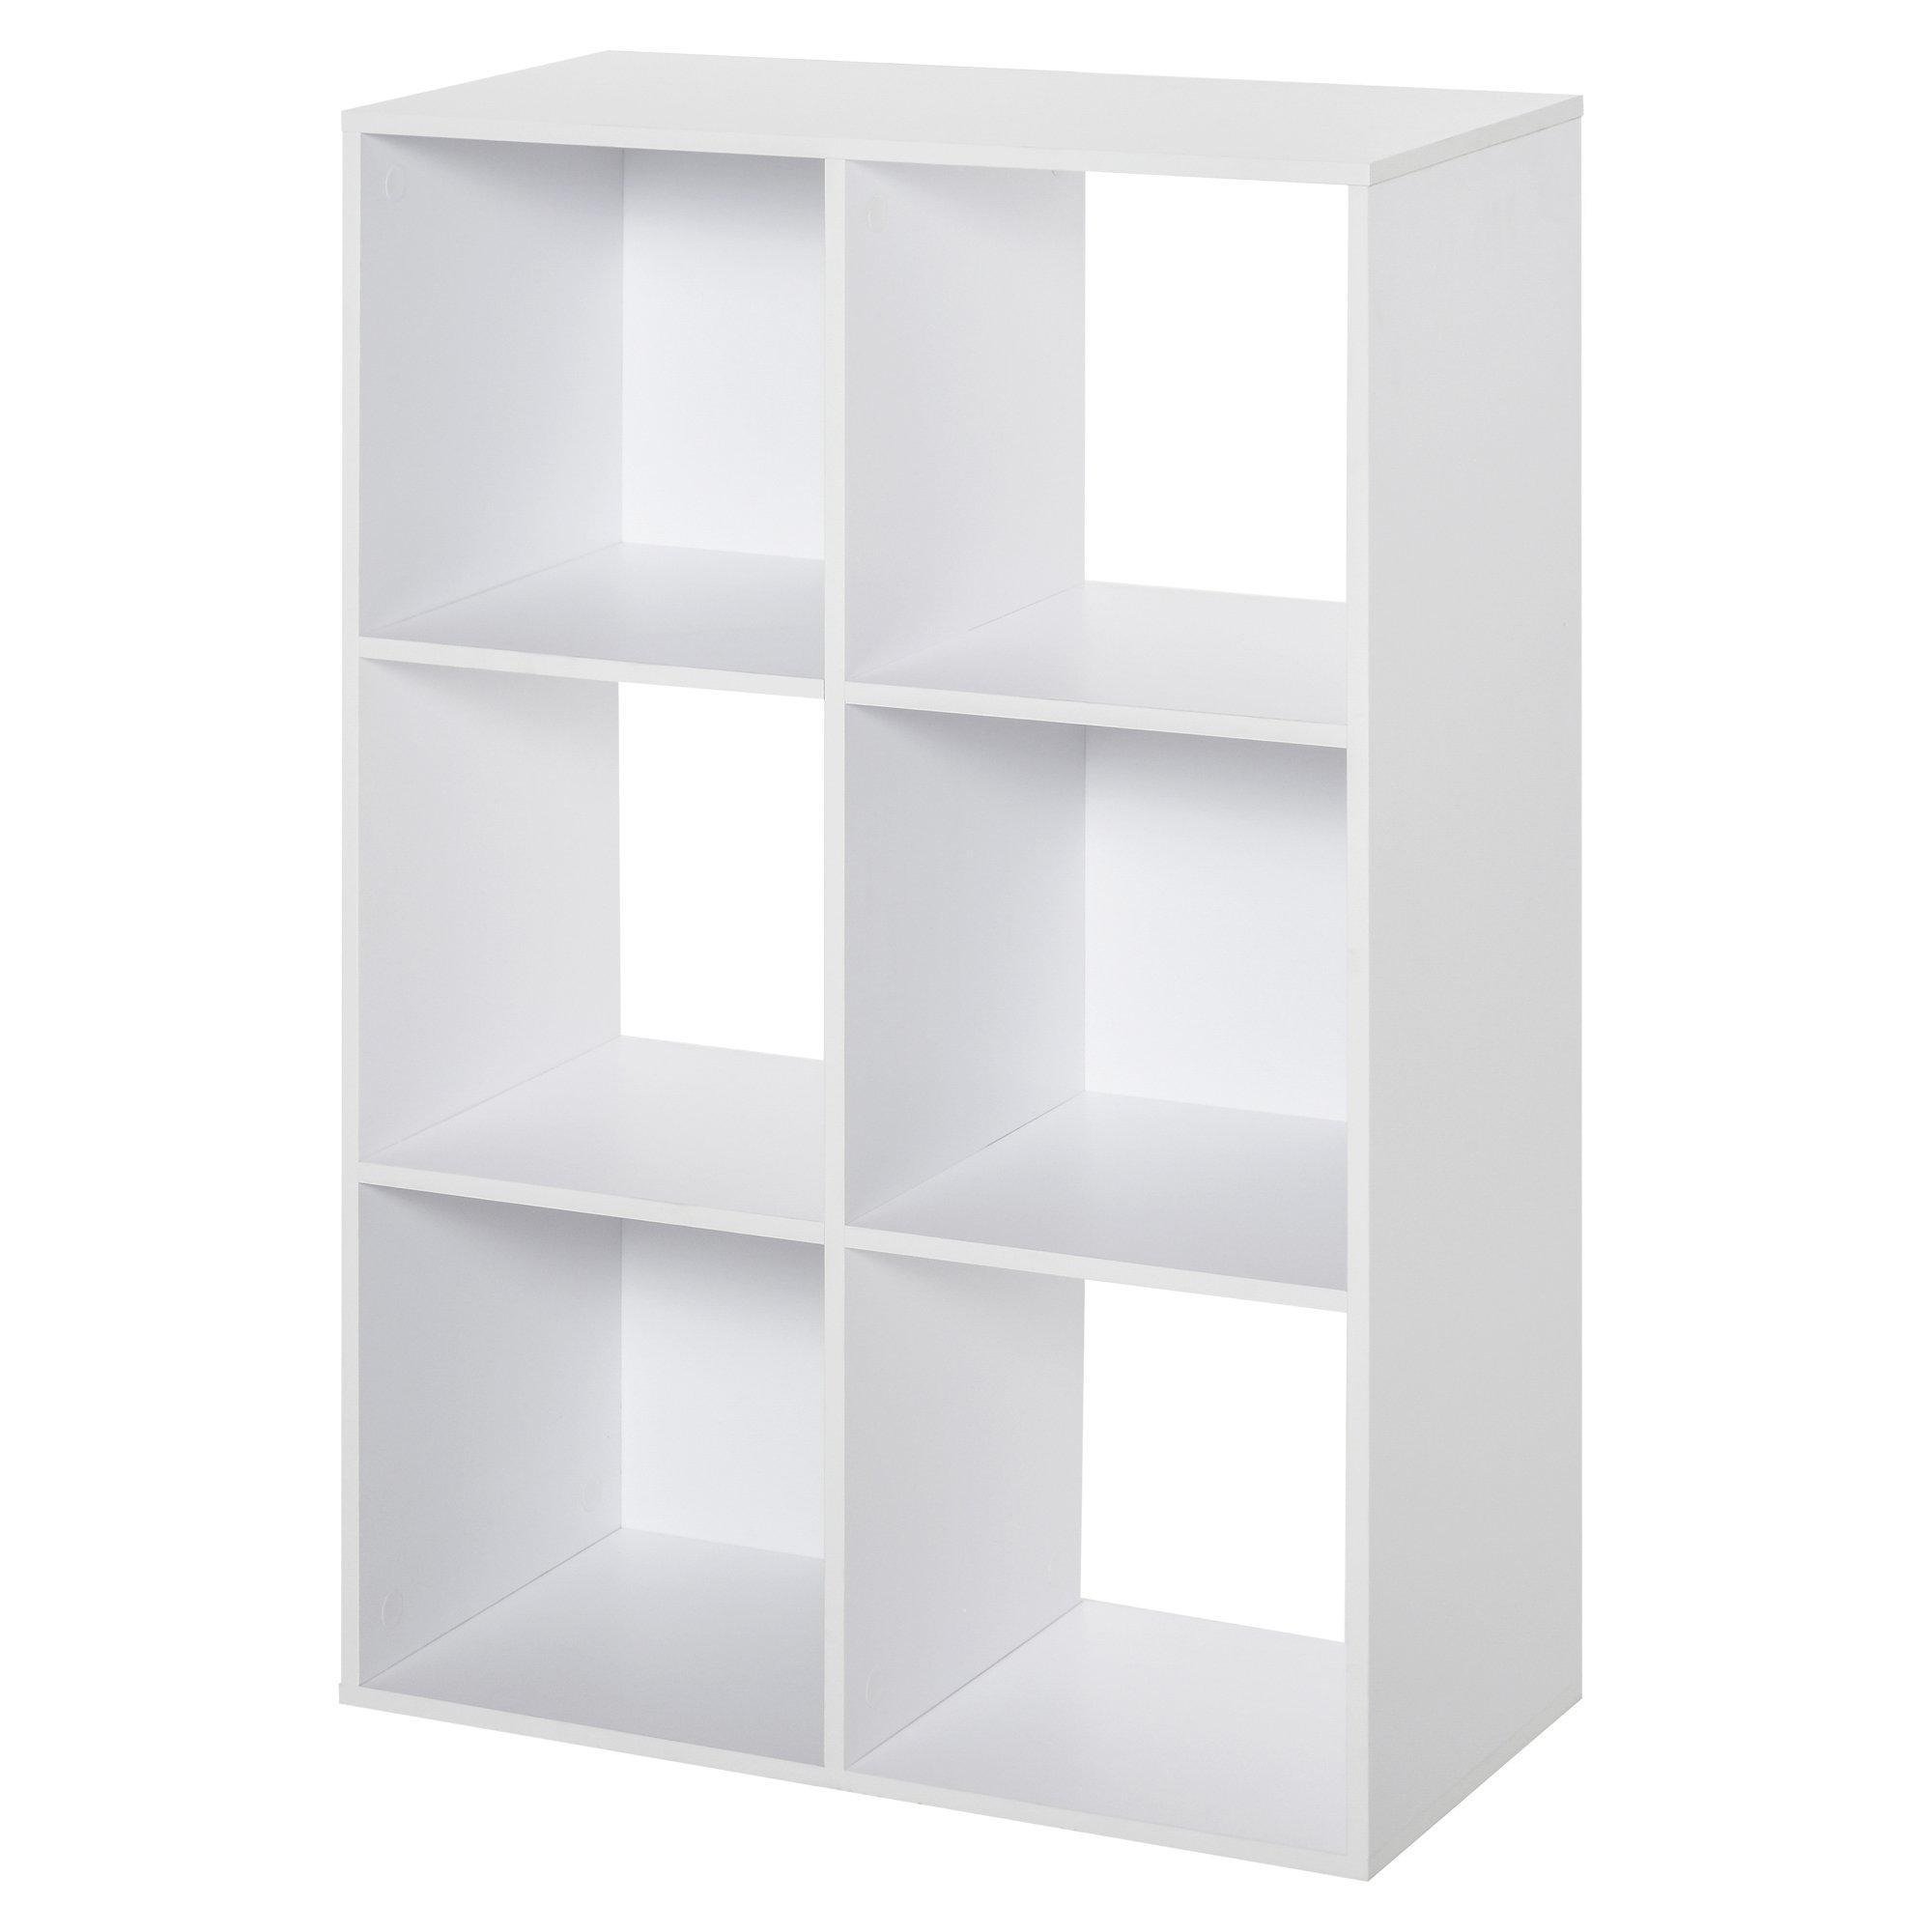 3 tier 6 Cubes Storage Unit Particle Board Cabinet Bookcase Organiser - image 1